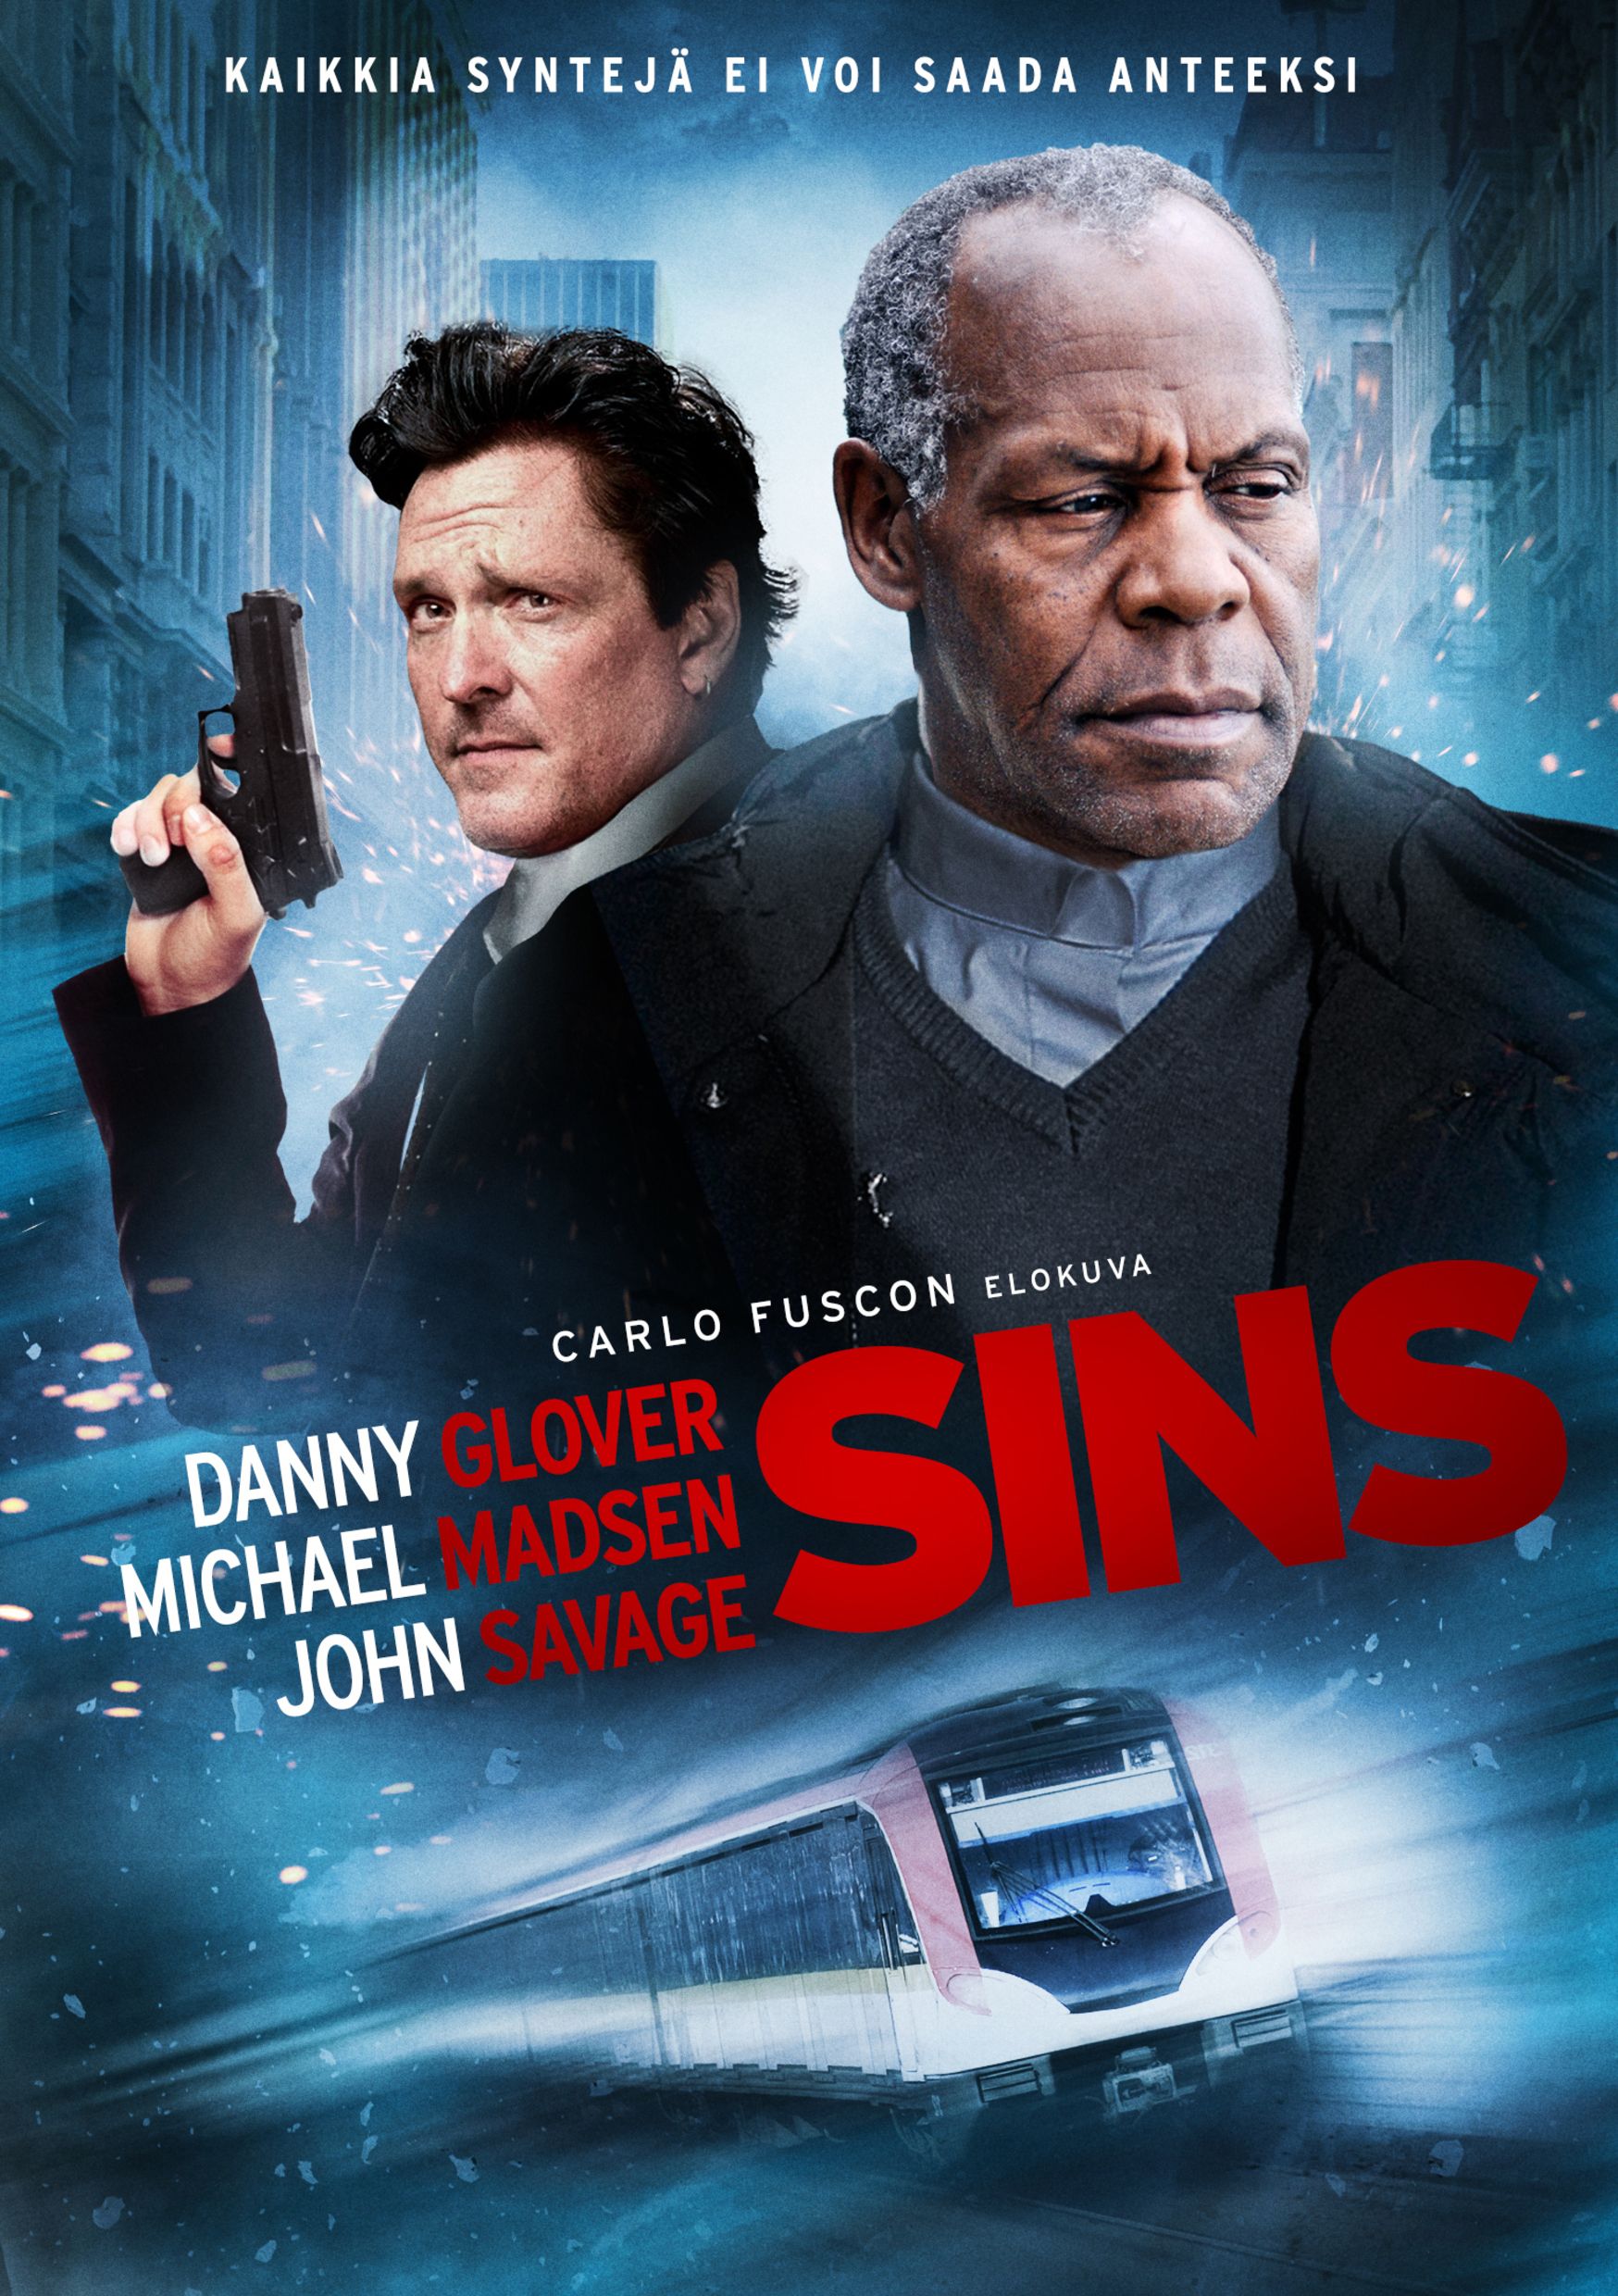 Sins Expiation (2012) Hindi ORG Dubbed BluRay download full movie